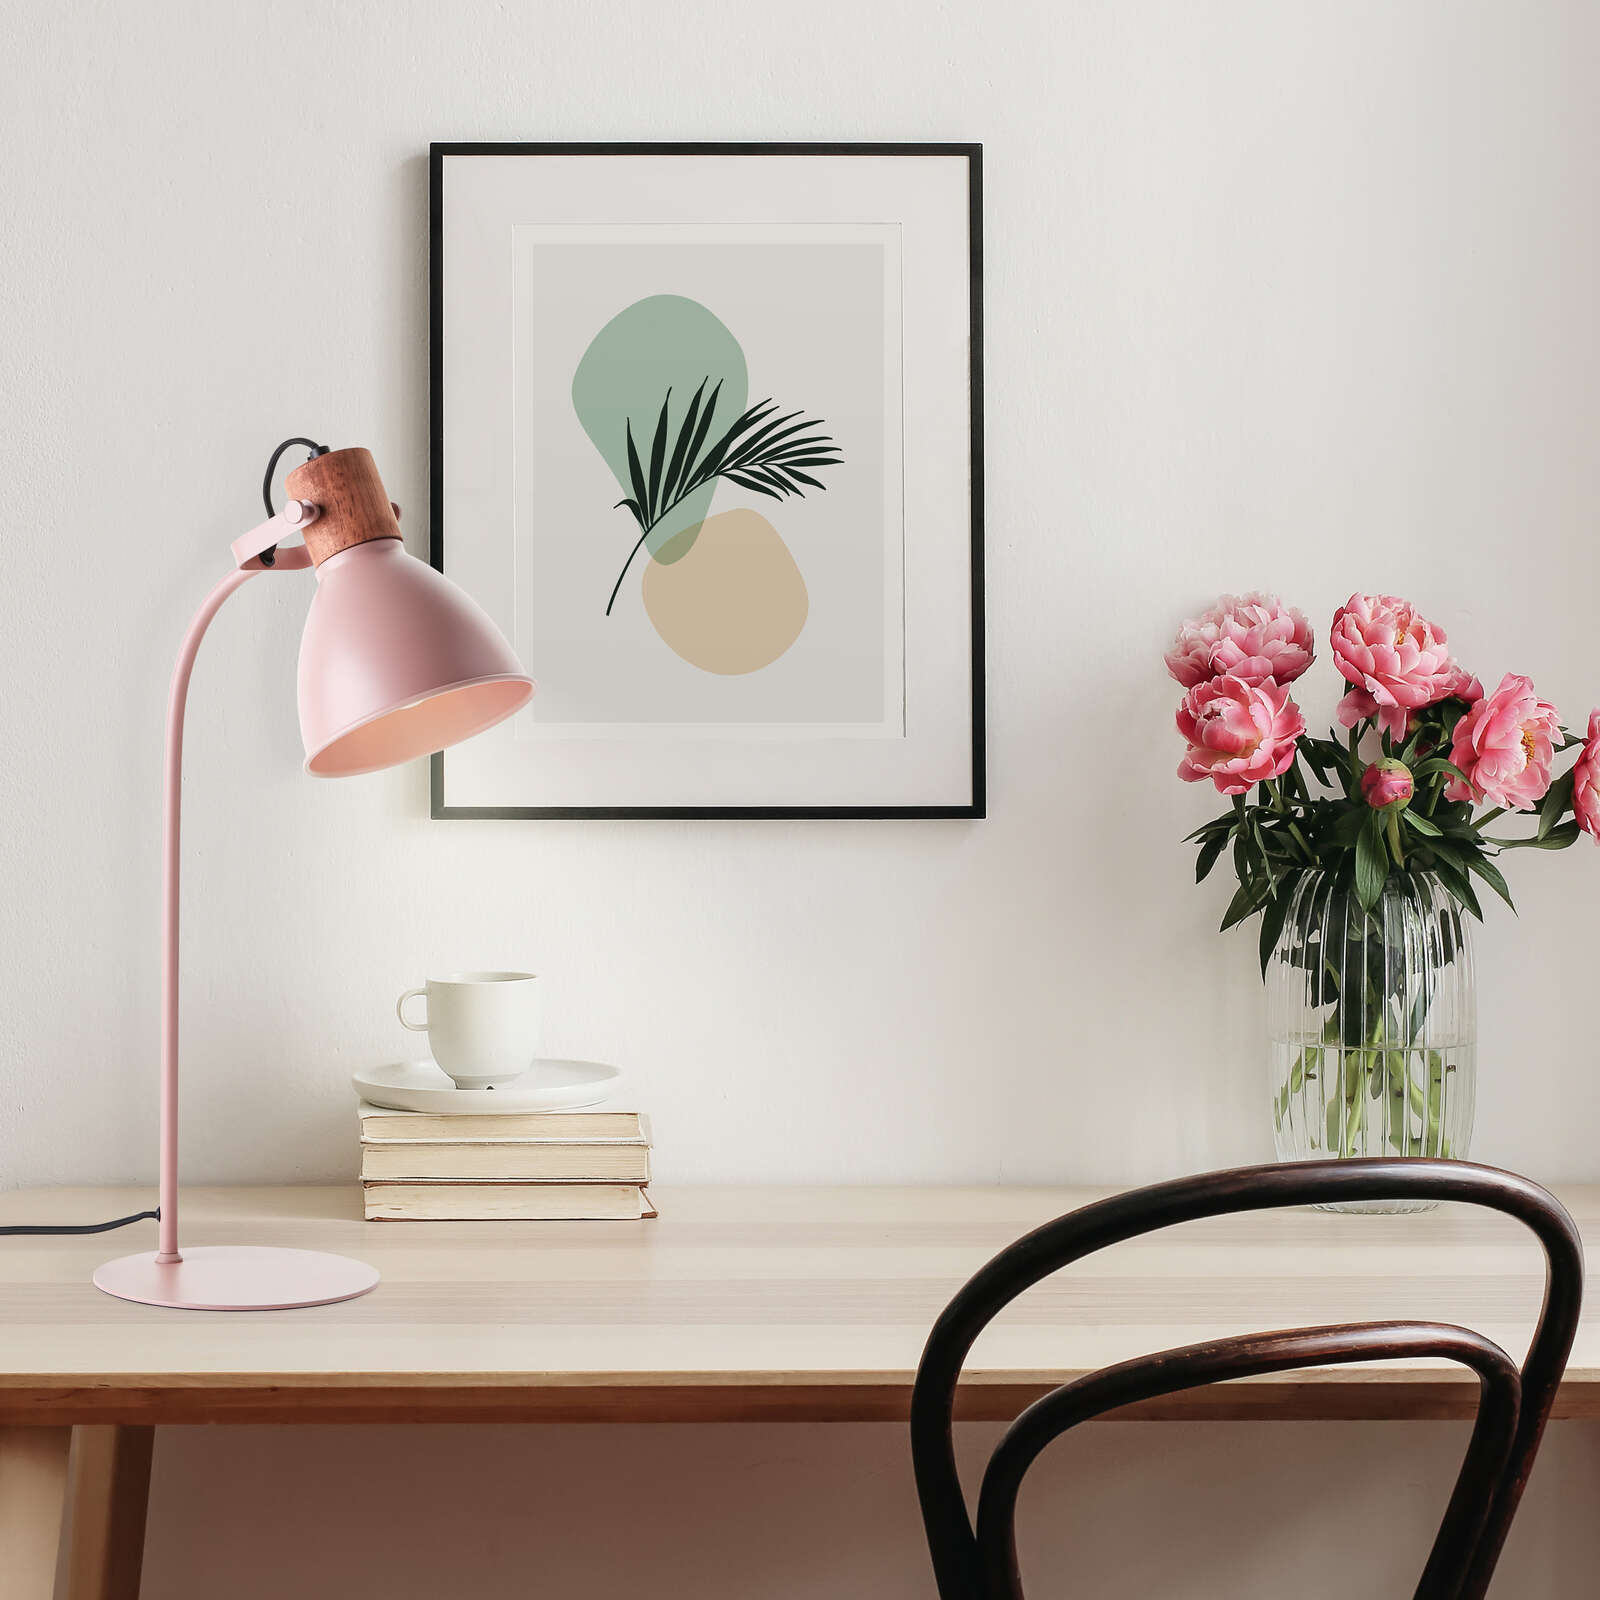             Wooden table lamp - Franziska 1 - Pink
        